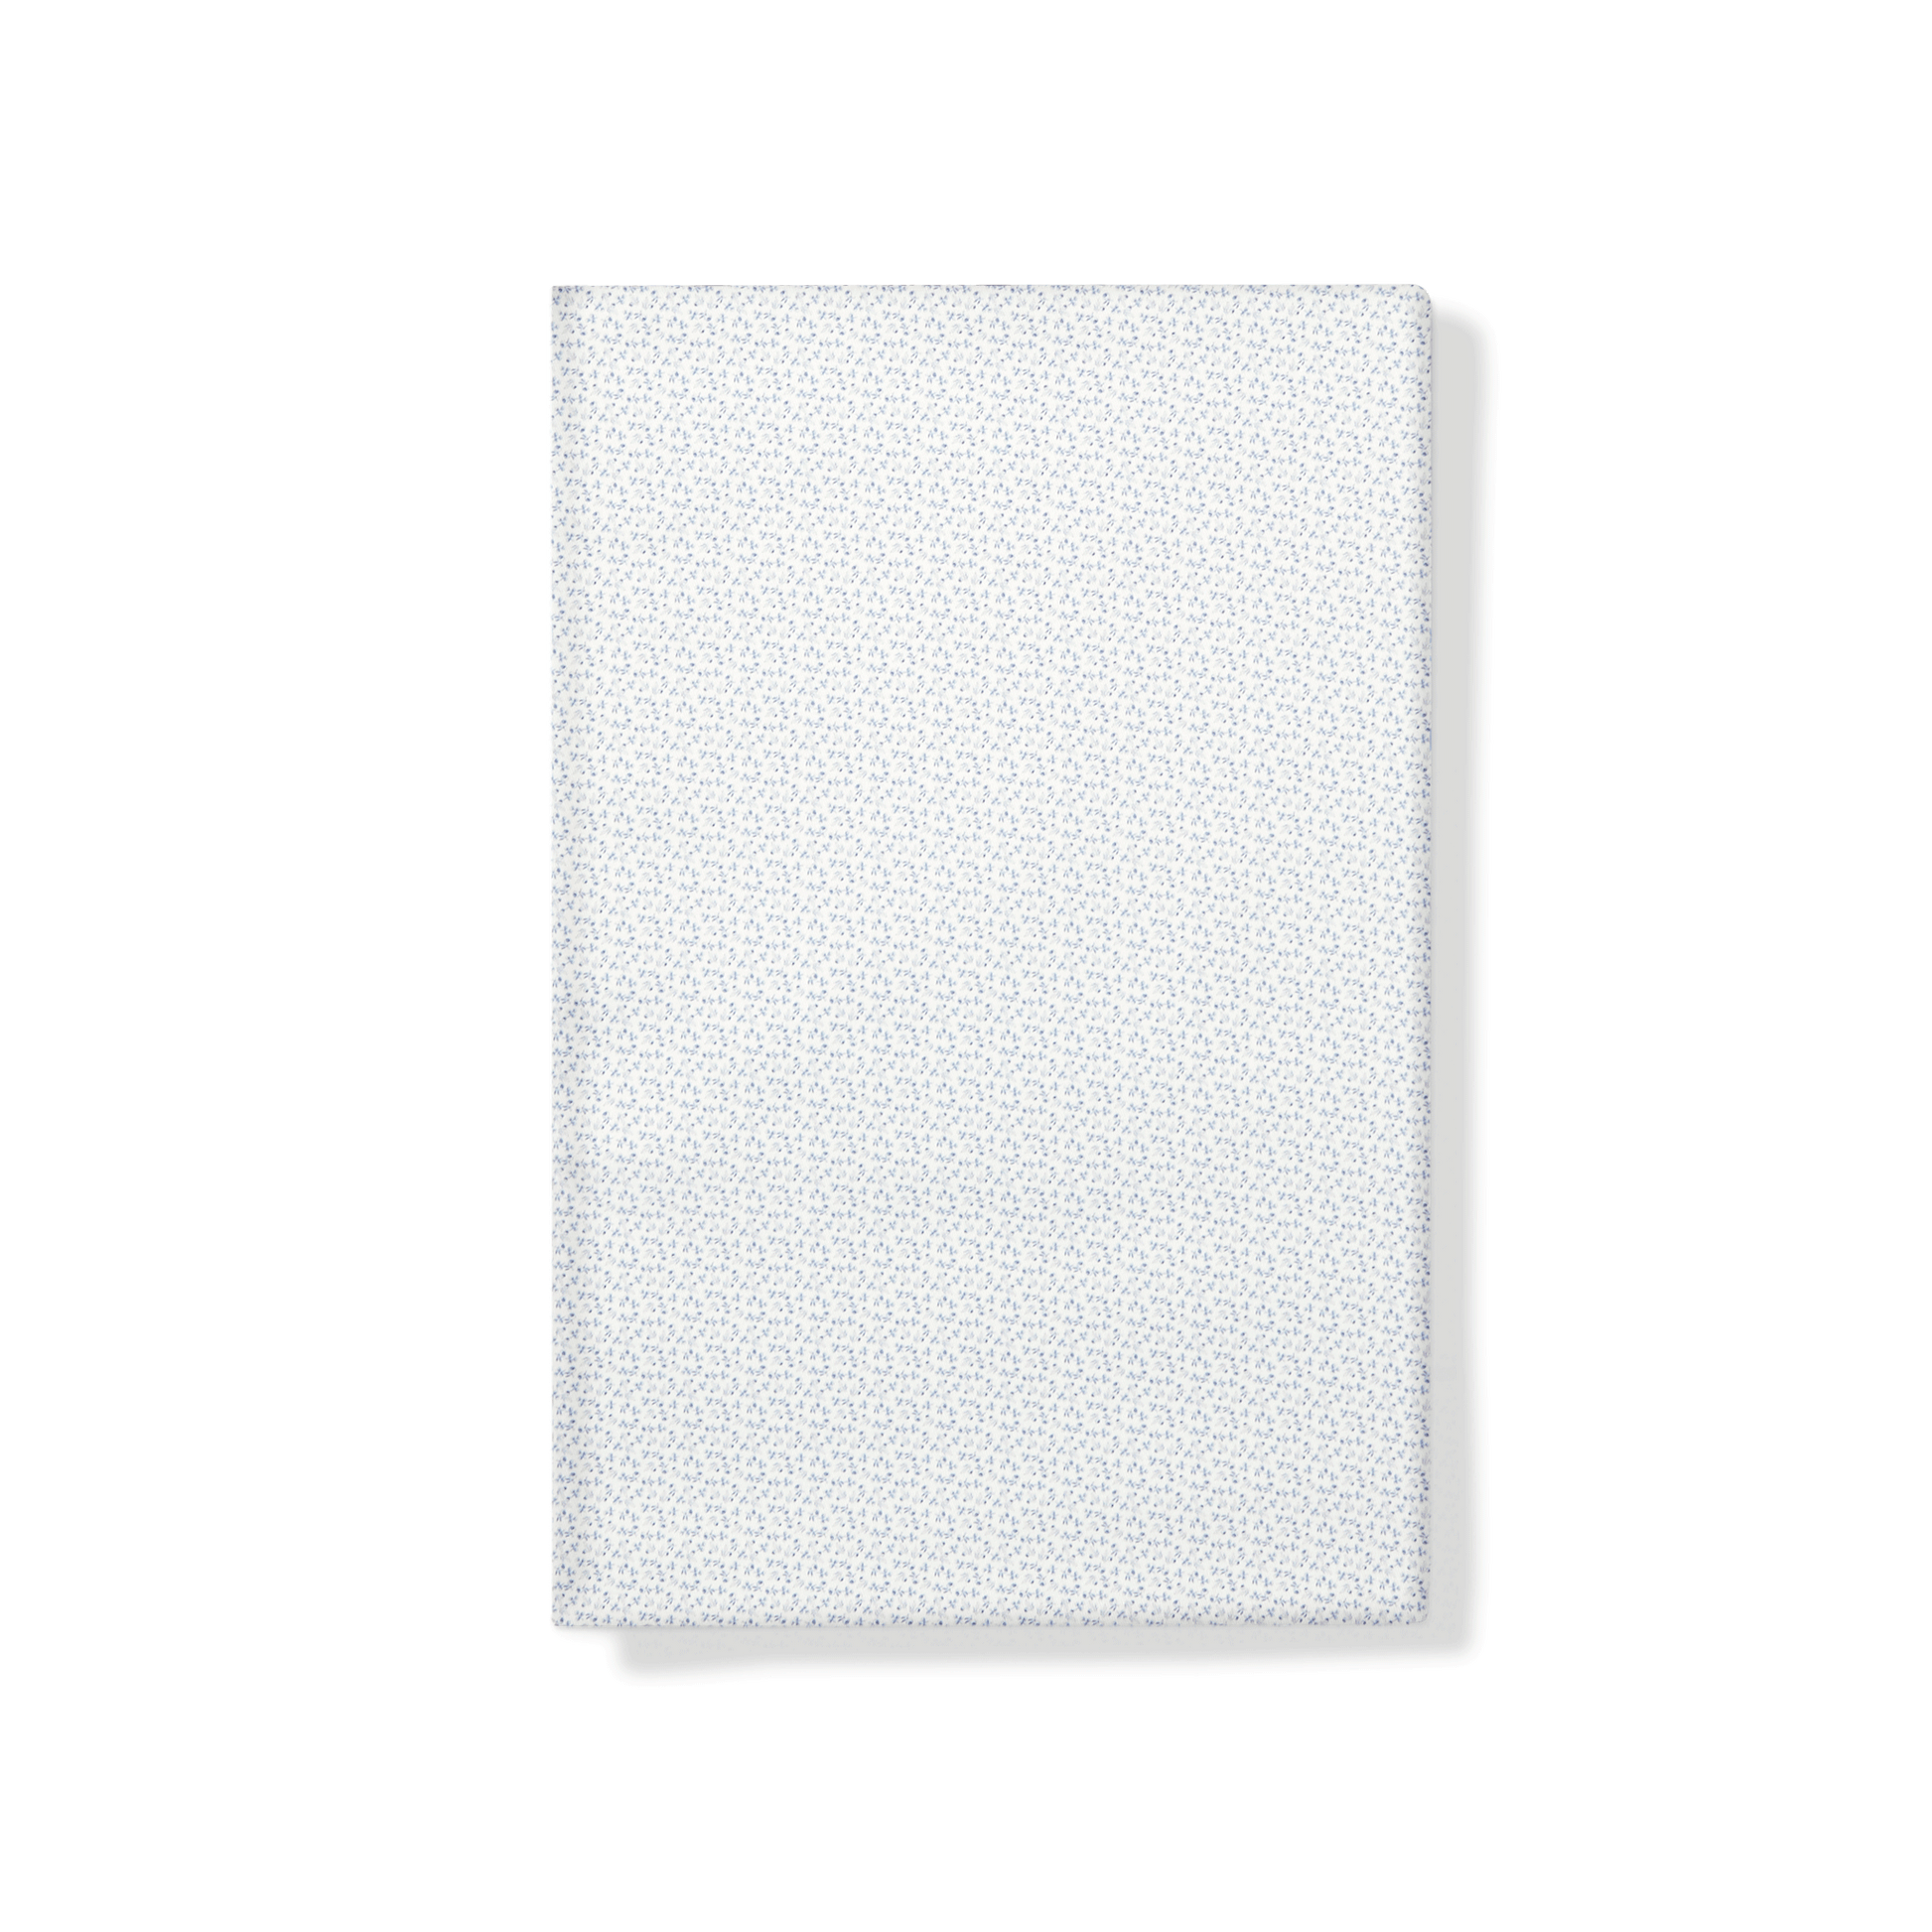 Rectangular Tablecloth Sarah Flint x Maman Blue And White Ditsy Floral Cotton